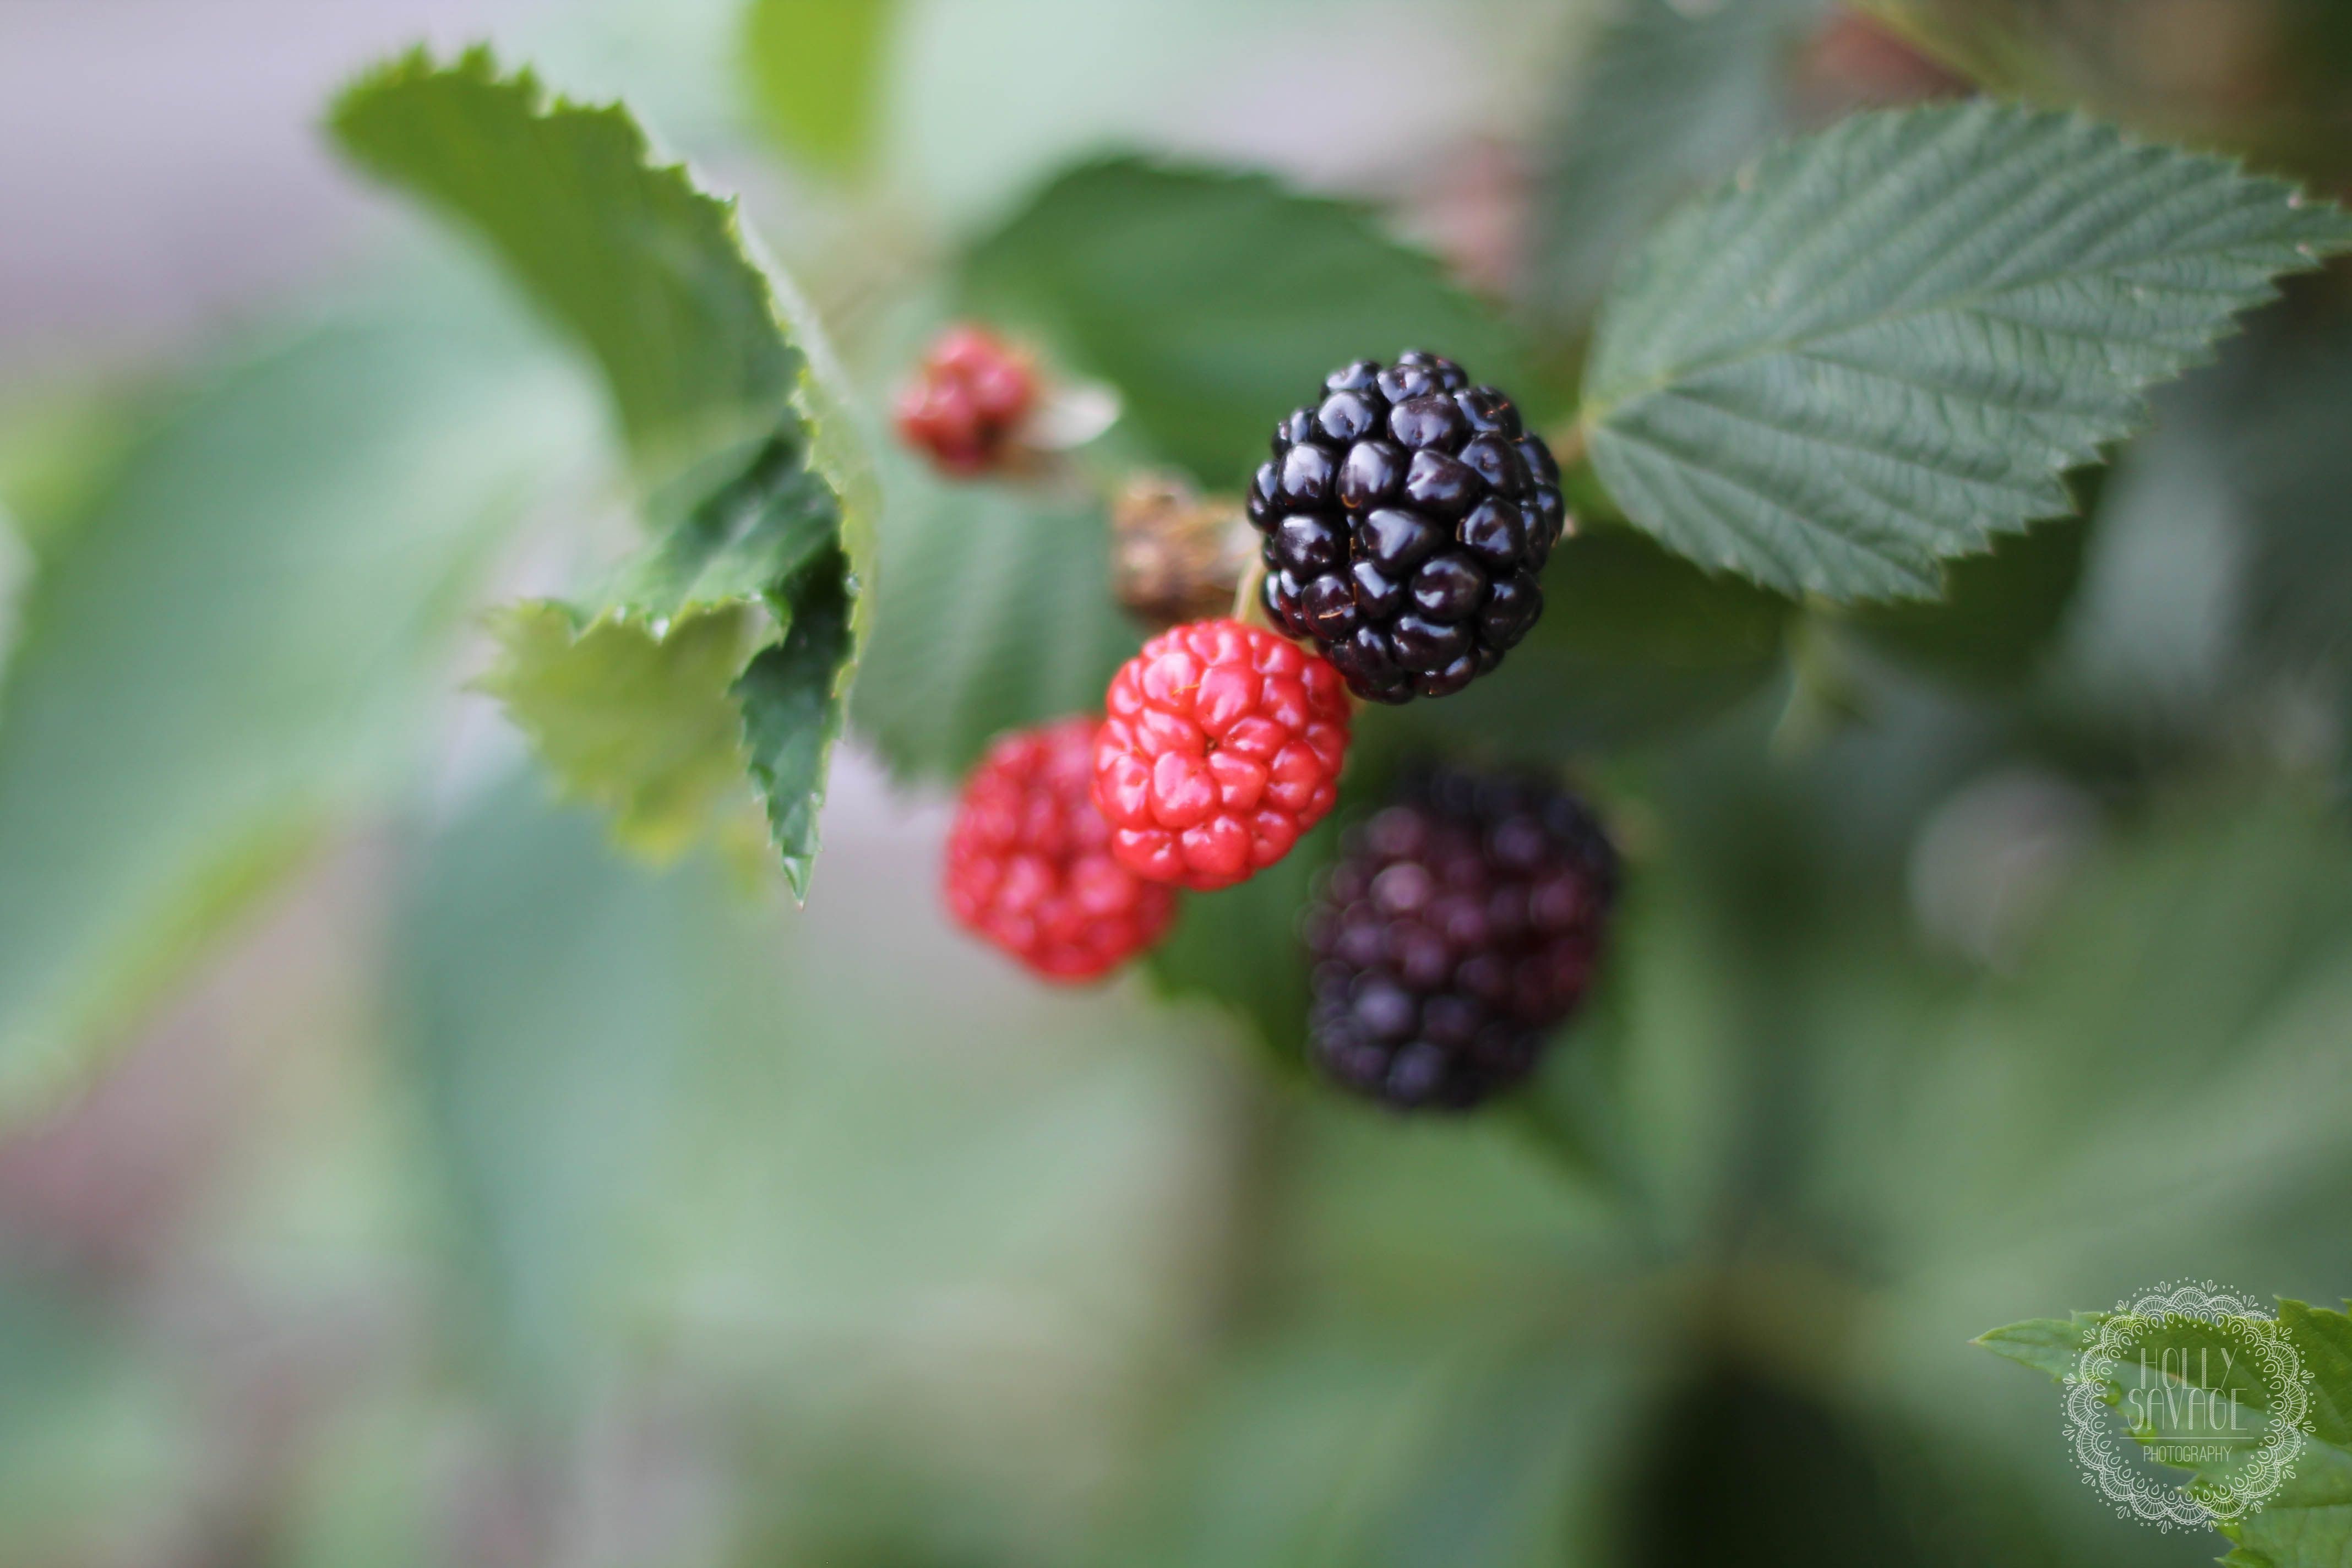 Holly Savage Photography - blackberries, macro | Holly Savage ...